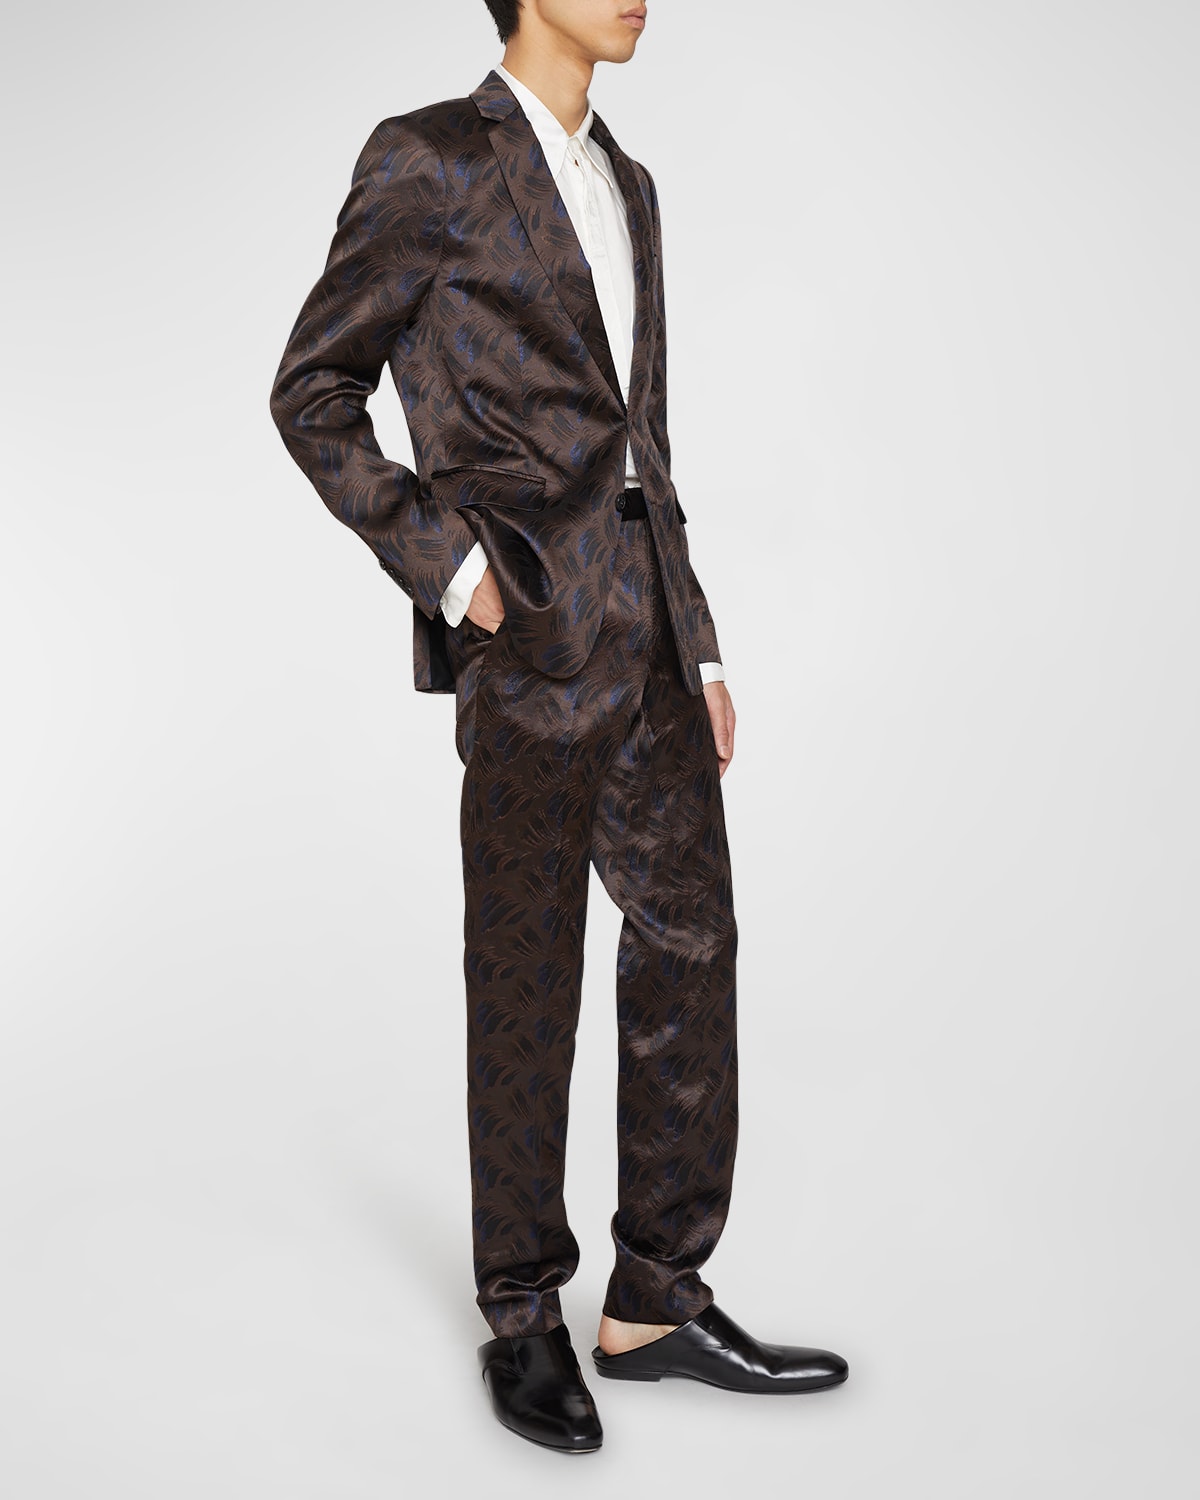 Men's Kayne Tie Jacquard Suit